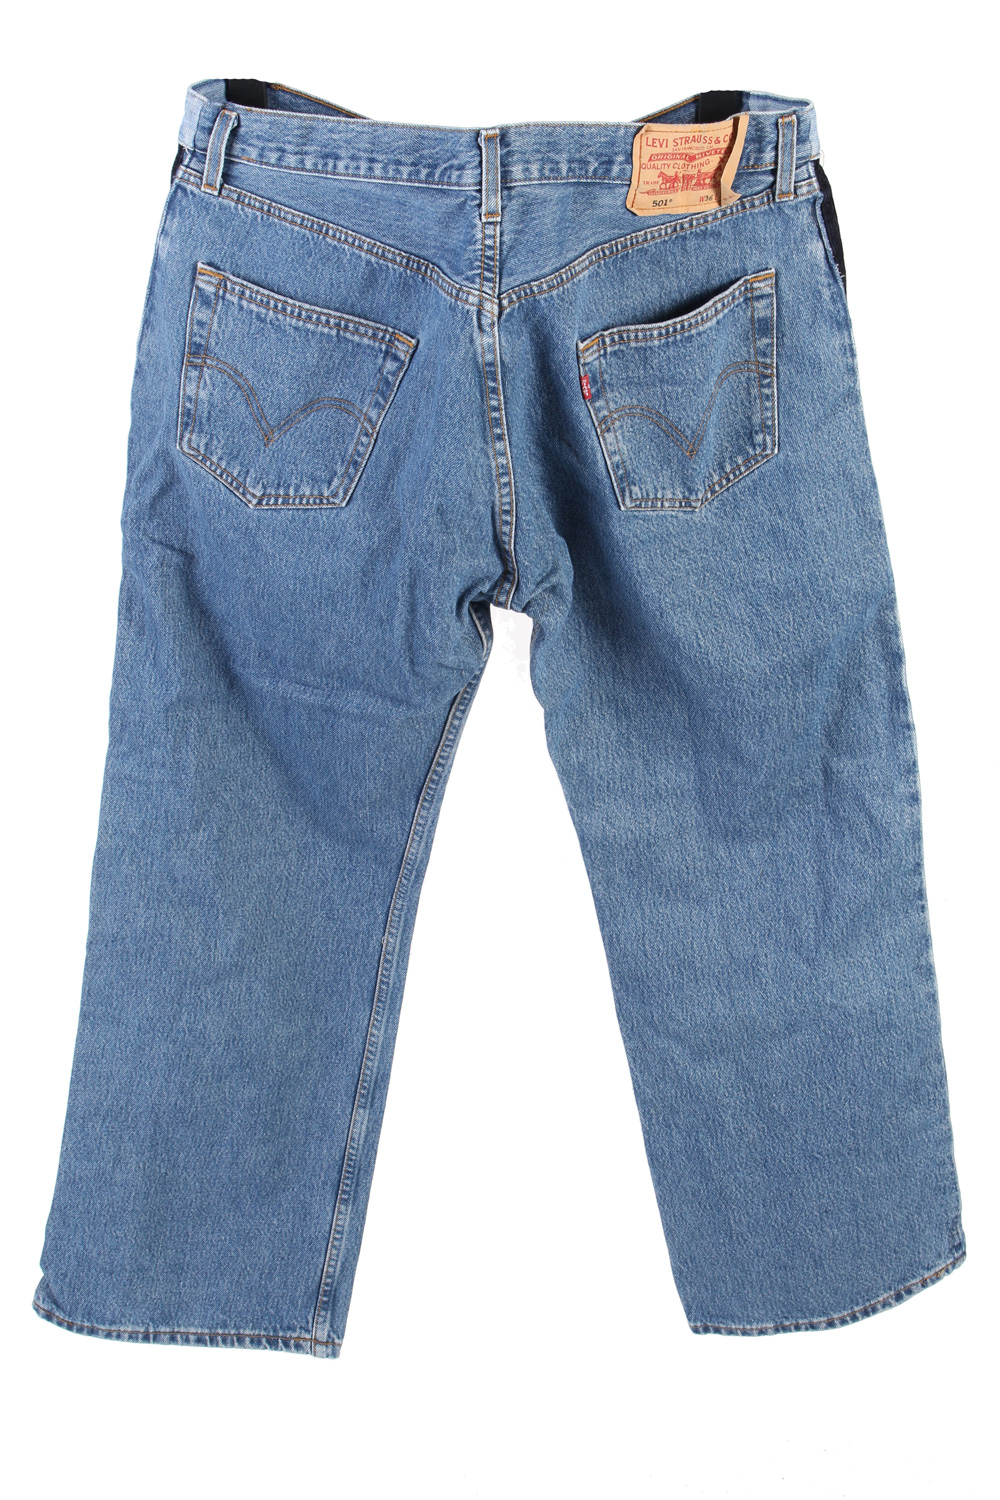 Levi’s 501 Denim Jeans Boot Leg Mens W36 L30 – Pepper Tree London